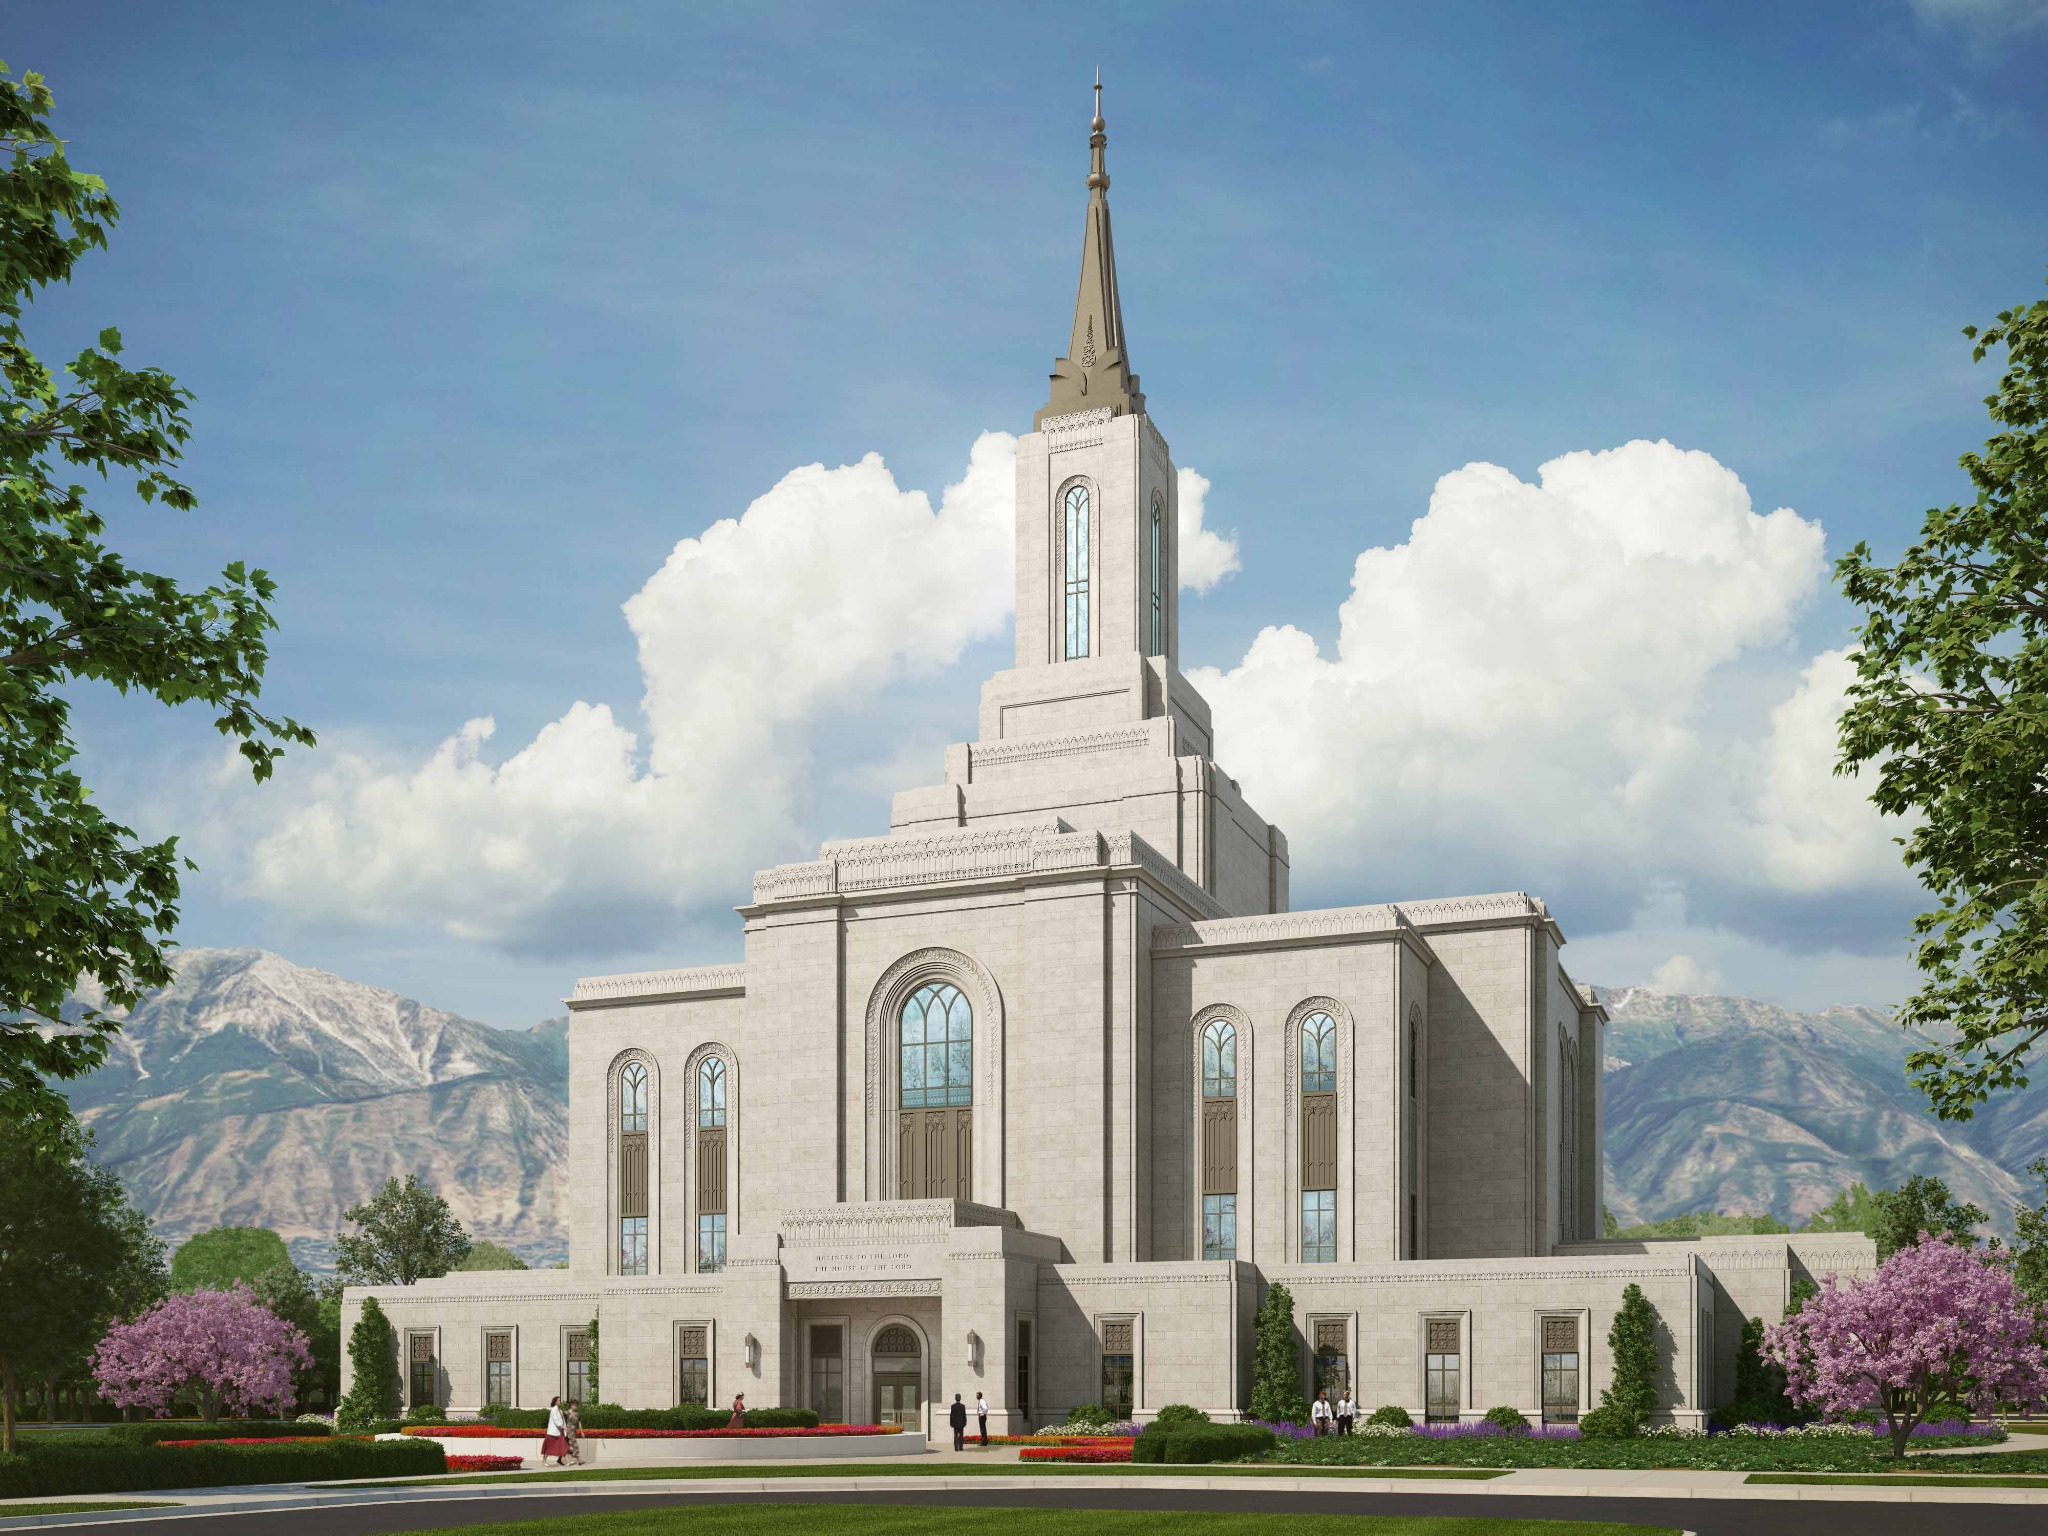 Dedication Dates Announced for Temple in Utah